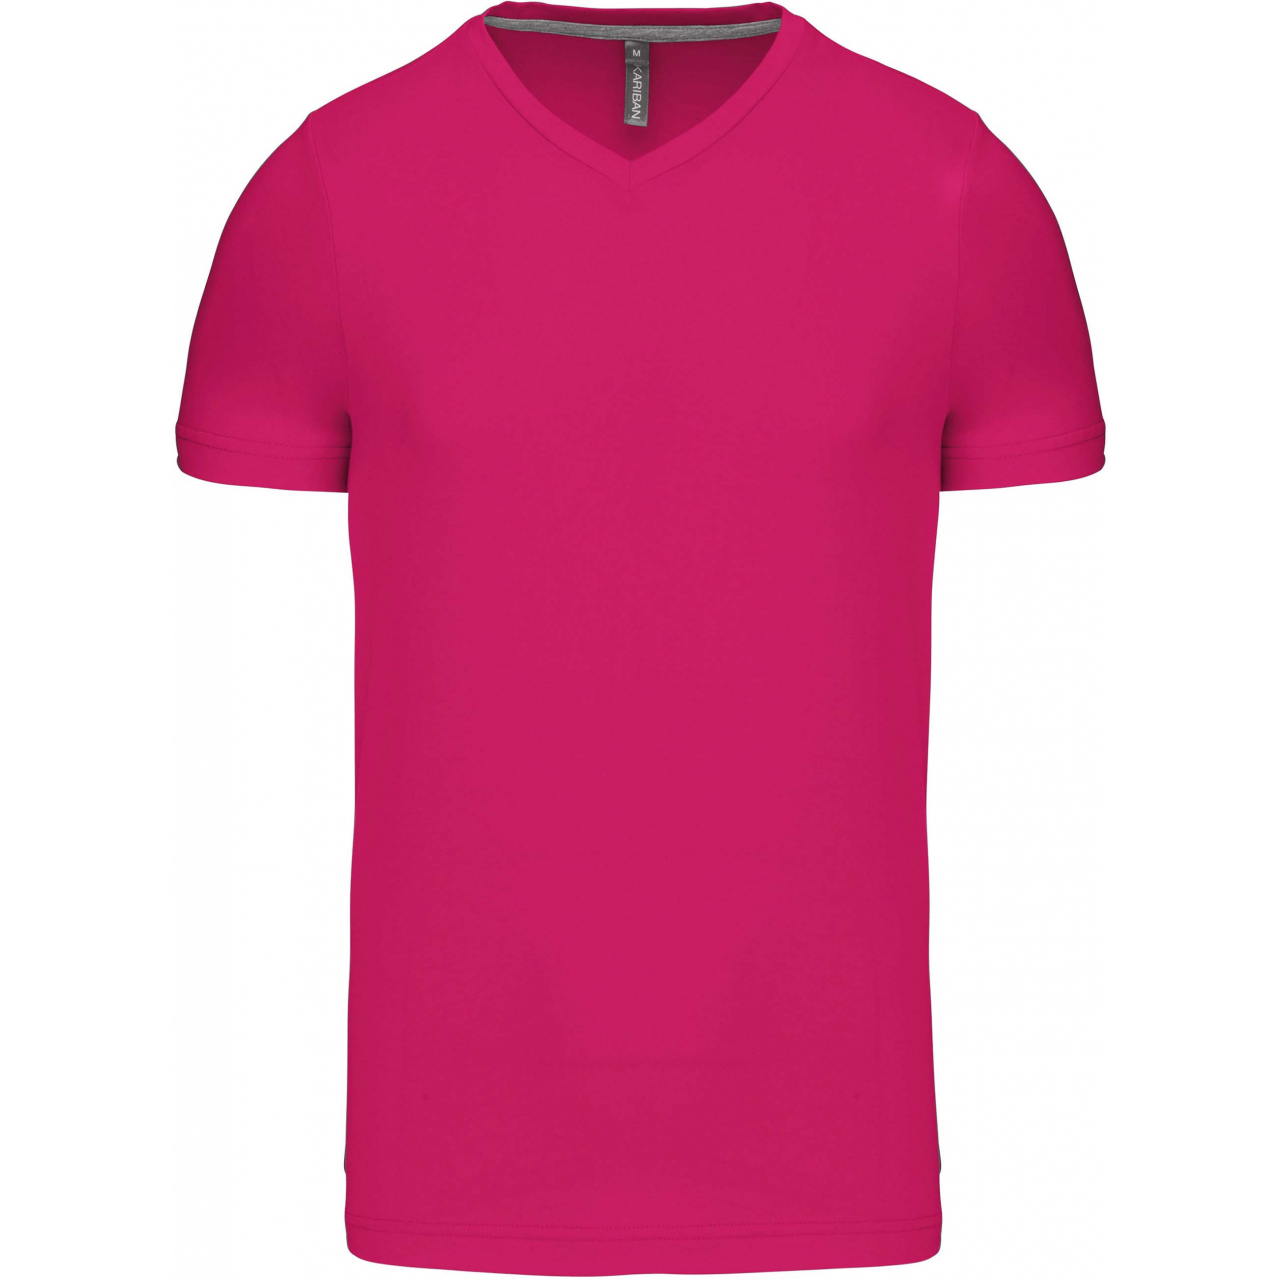 Pánské tričko Kariban krátký rukáv V-neck - růžové, XXL